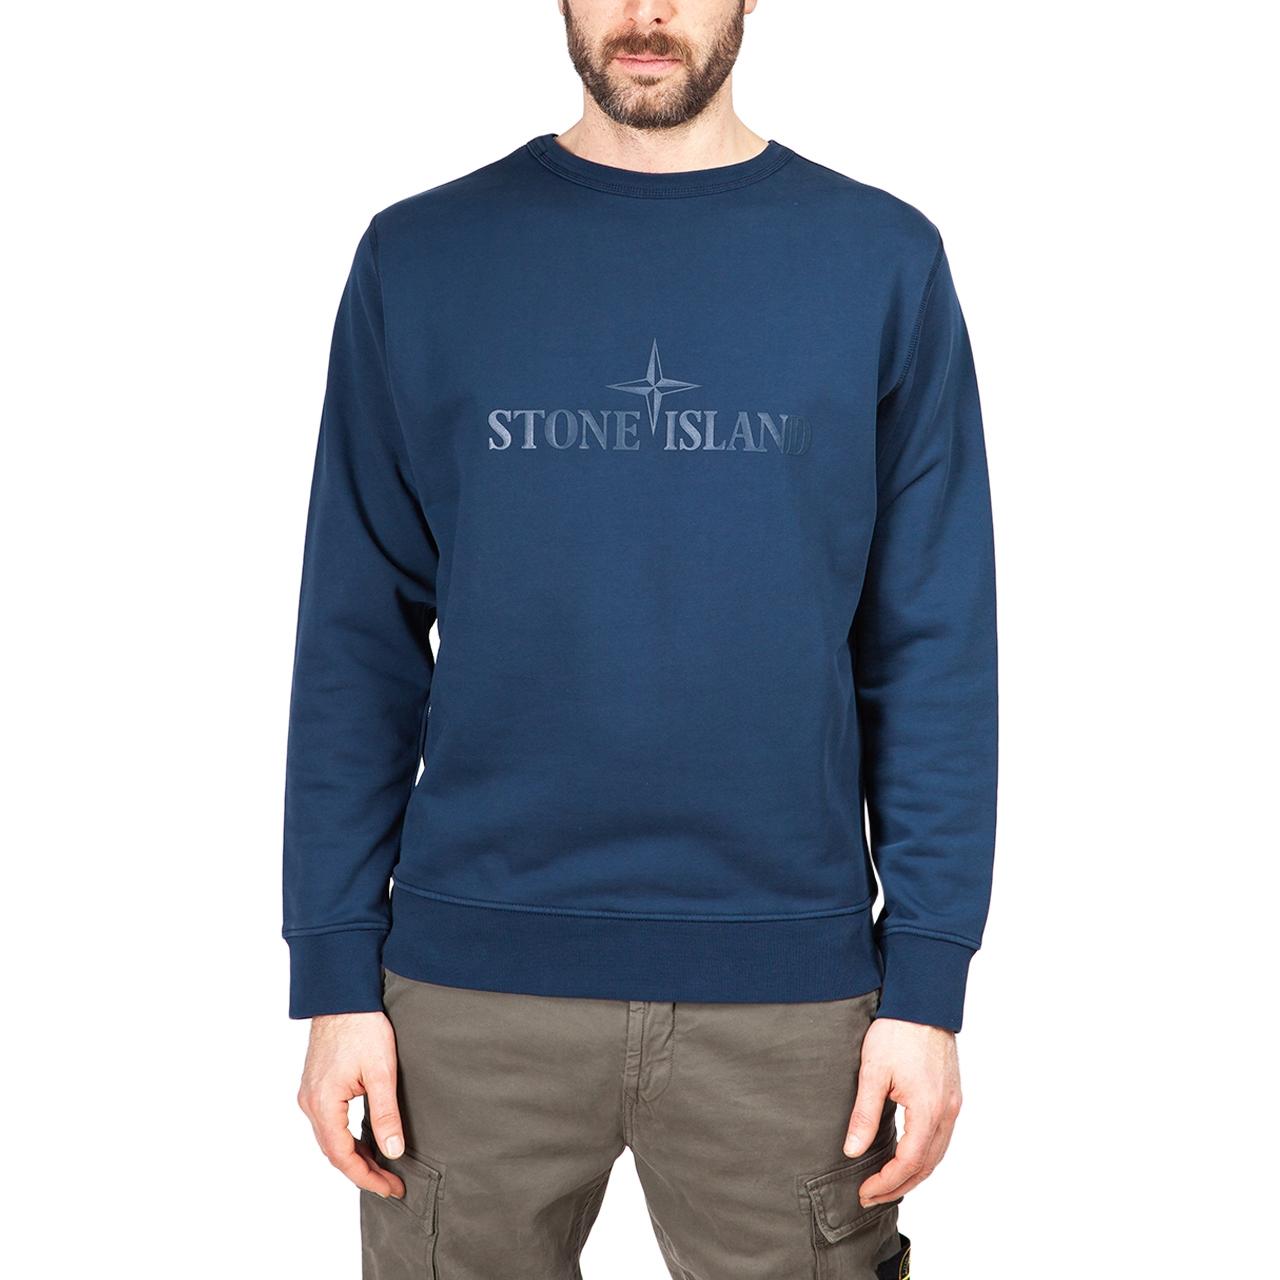 stone island hoodie logo on front